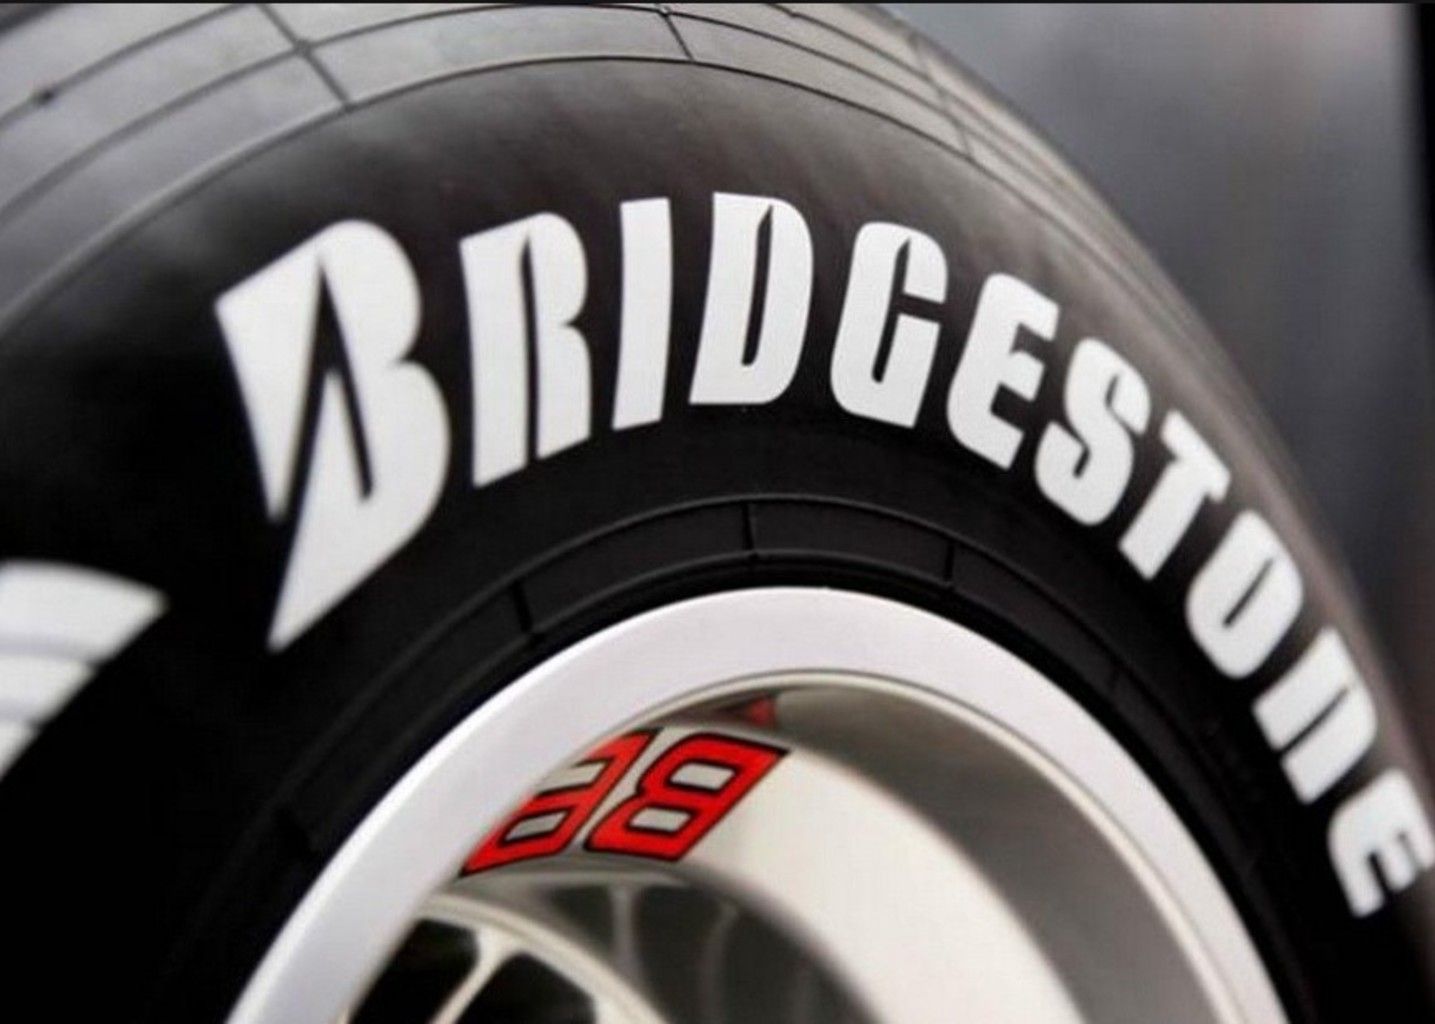 Review of the best Bridgestone tires in 2020